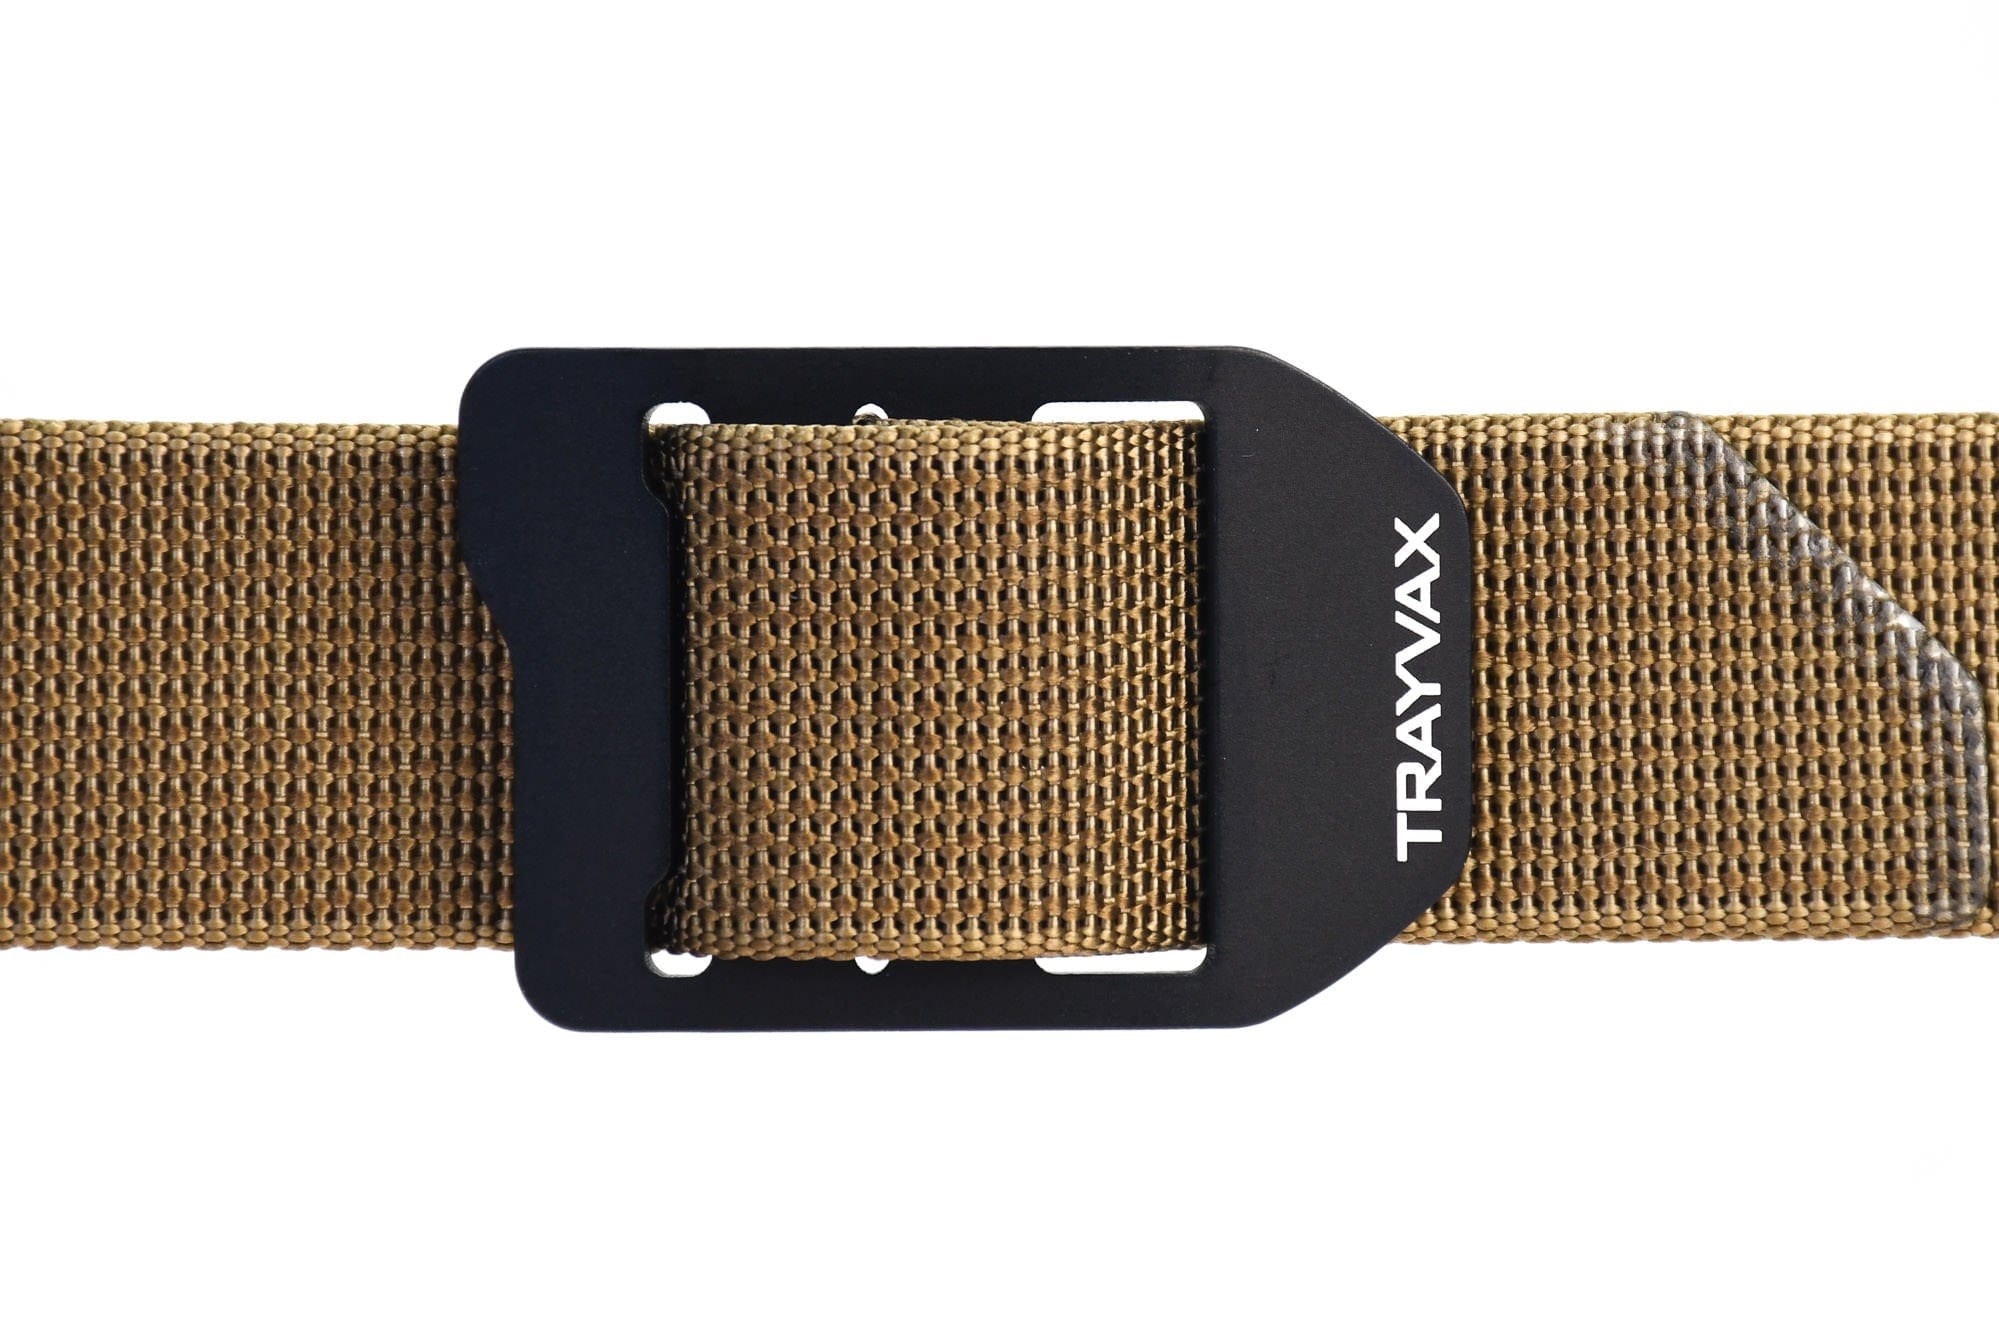 Trayvax Enterprises Belt Tan / Black / One Size (up to 46") Cinch Belt